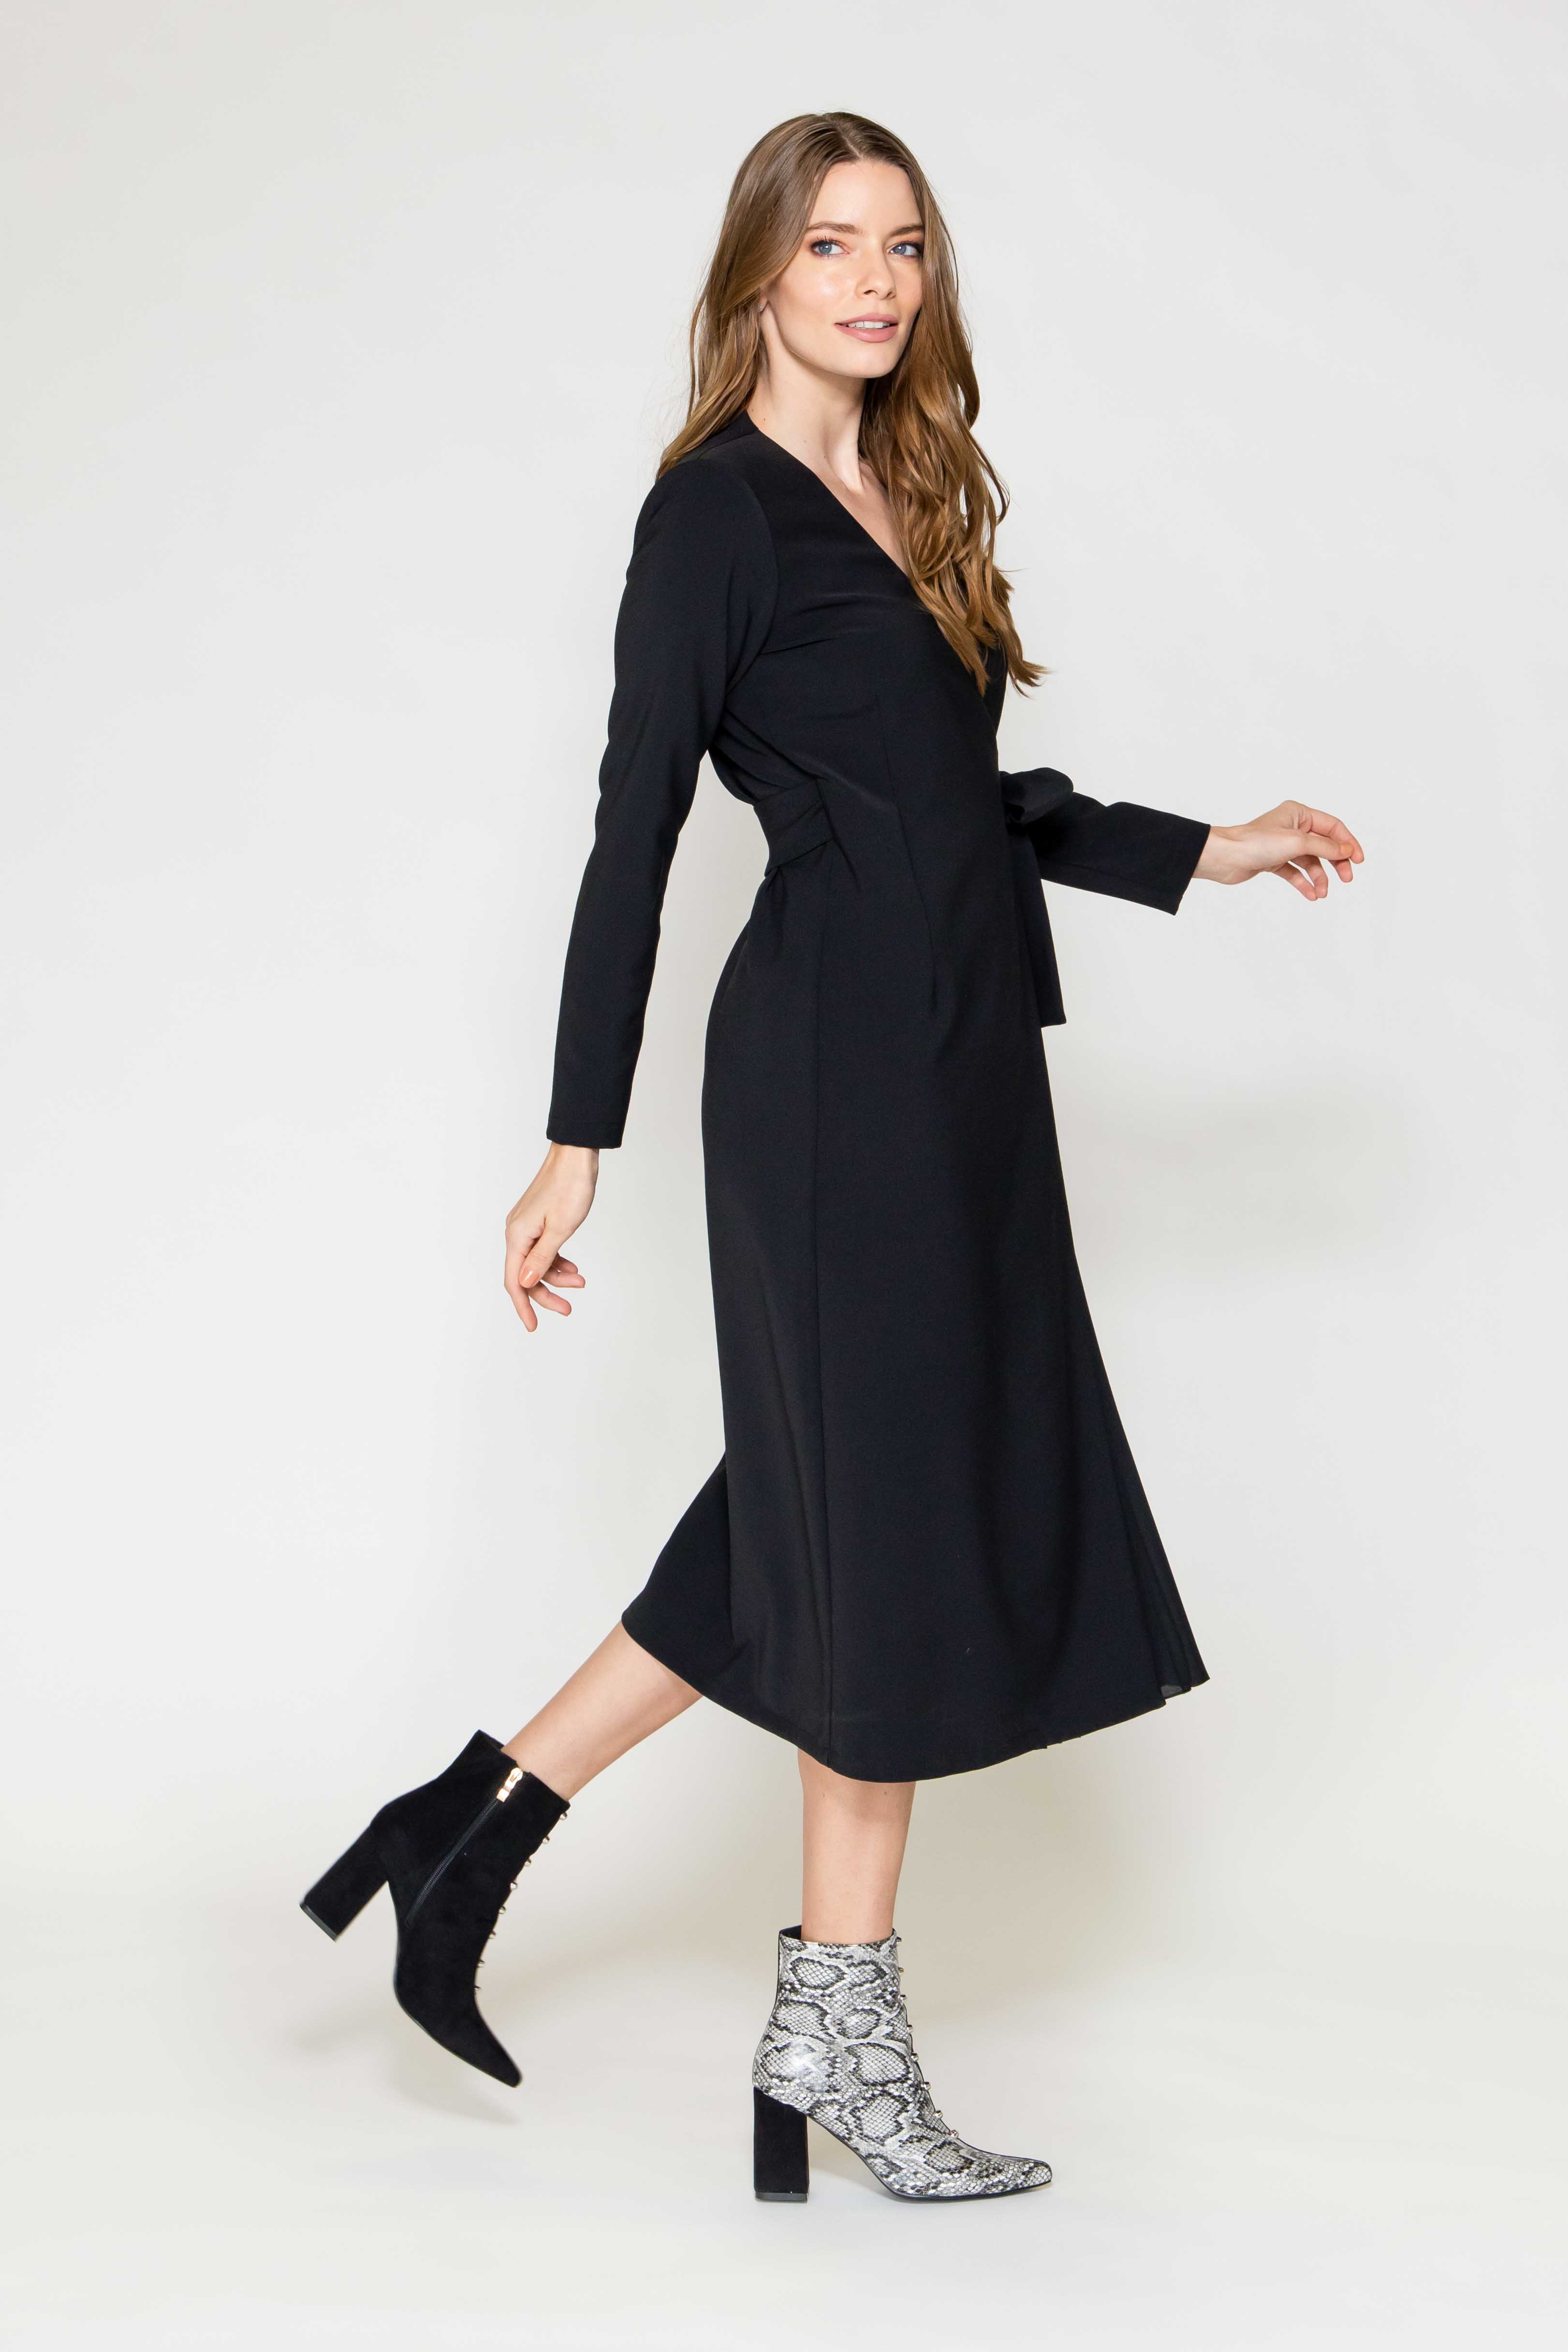 Cristina Gavioli Sofia Black Pleated Long Sleeve Wrap Dress with Ronan Black Suede Boots- Italian Women Clothing